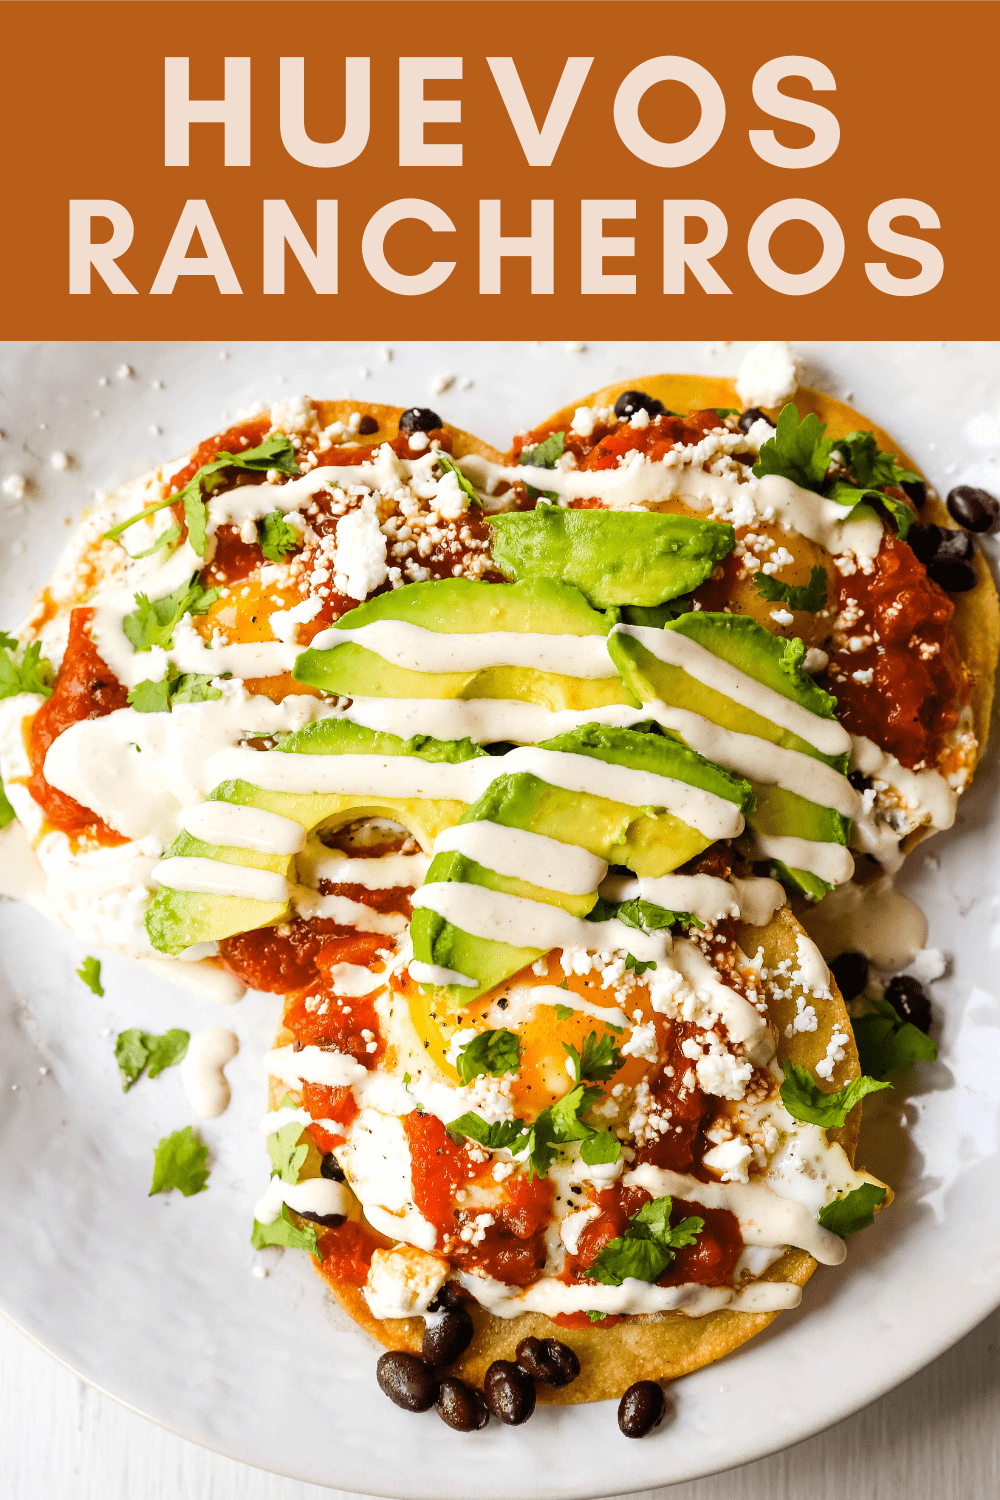 Huevos Rancheros. A traditional Mexican breakfast dish made with fried corn tortillas, fried egg, ranchera salsa, beans, avocado, cheese, and salsa.  #huevosrancheros #mexican #mexicanfood #breakfast